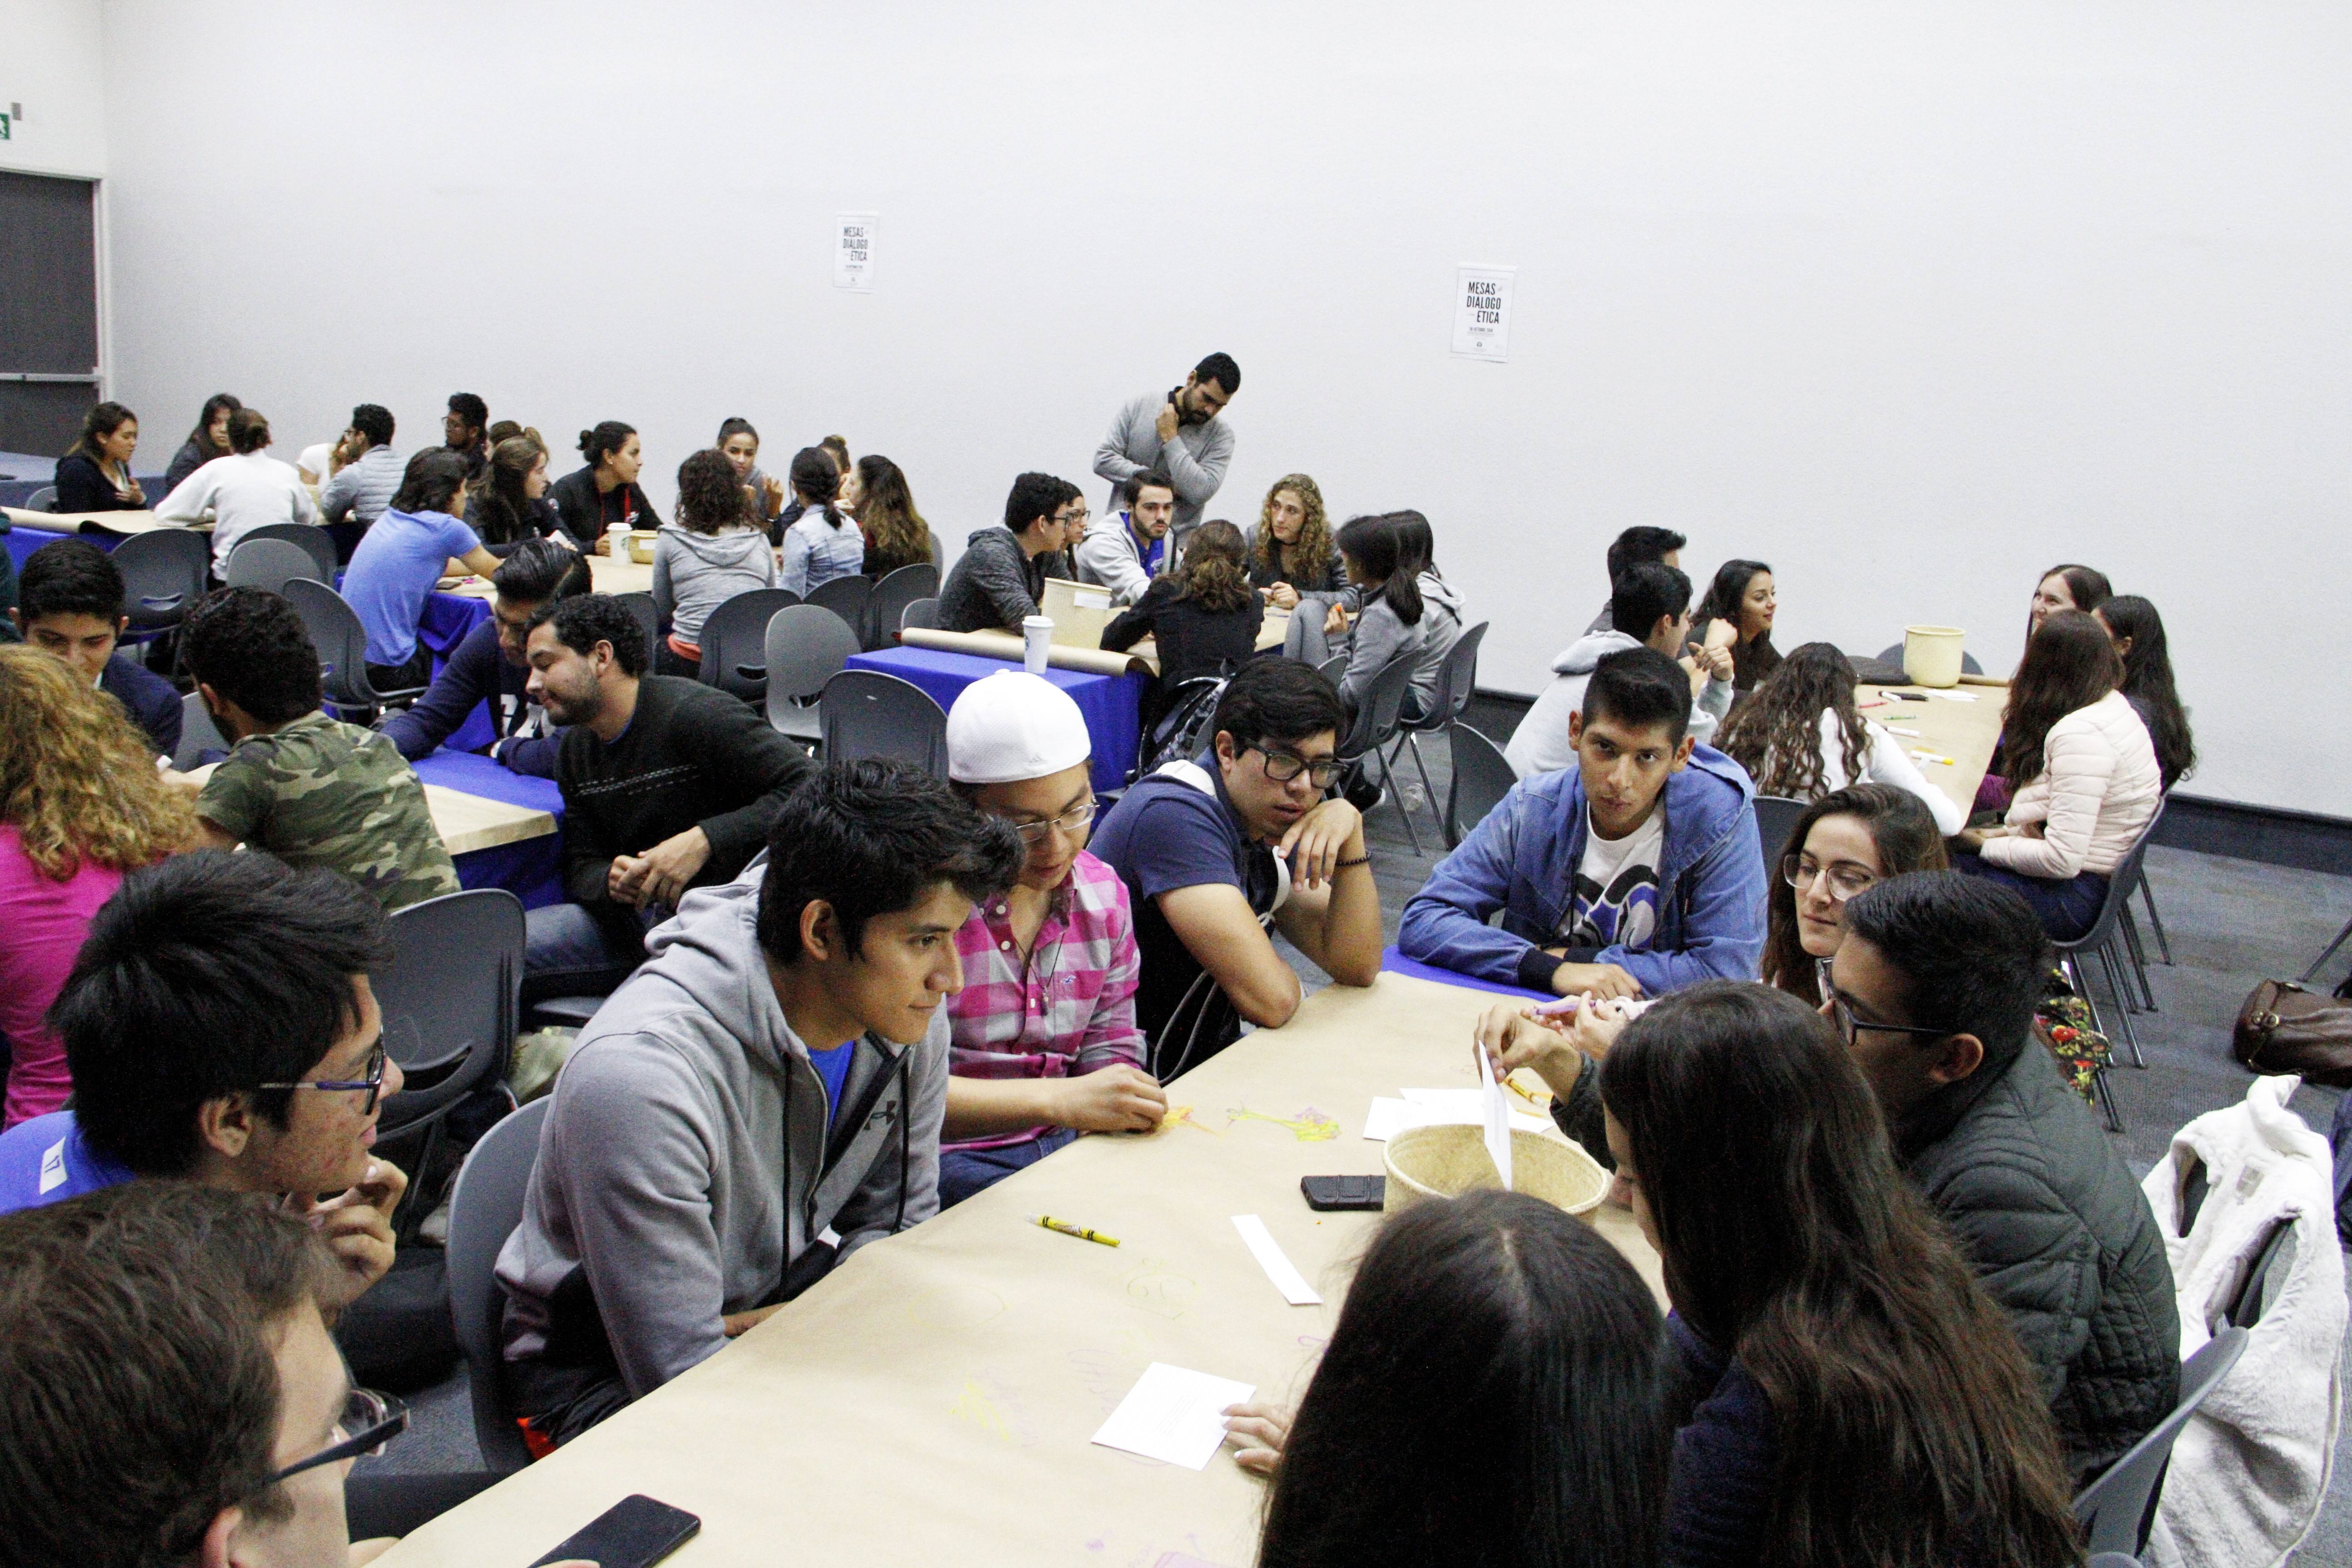 Mesas de Diálogo con Ética reunió a 176 alumnos y a 8 profesores de la